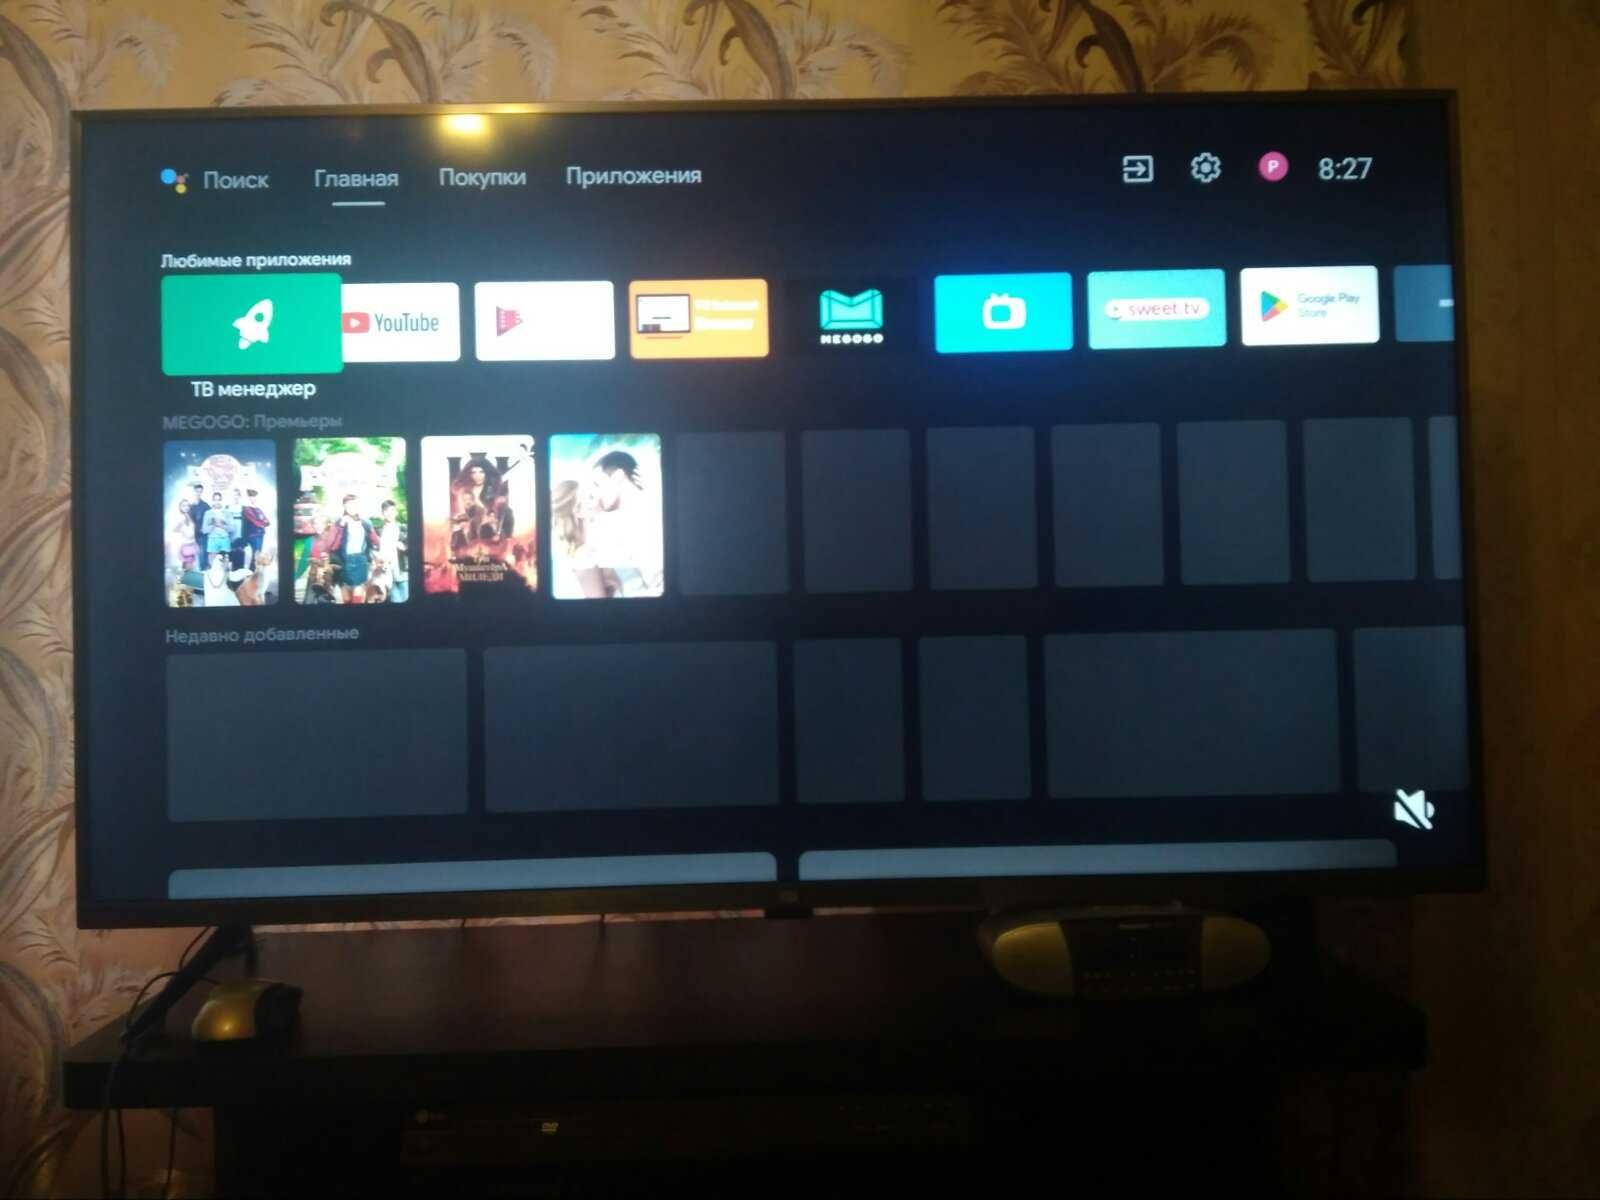 Телевизор Xiaomi Mi TV 4S 50